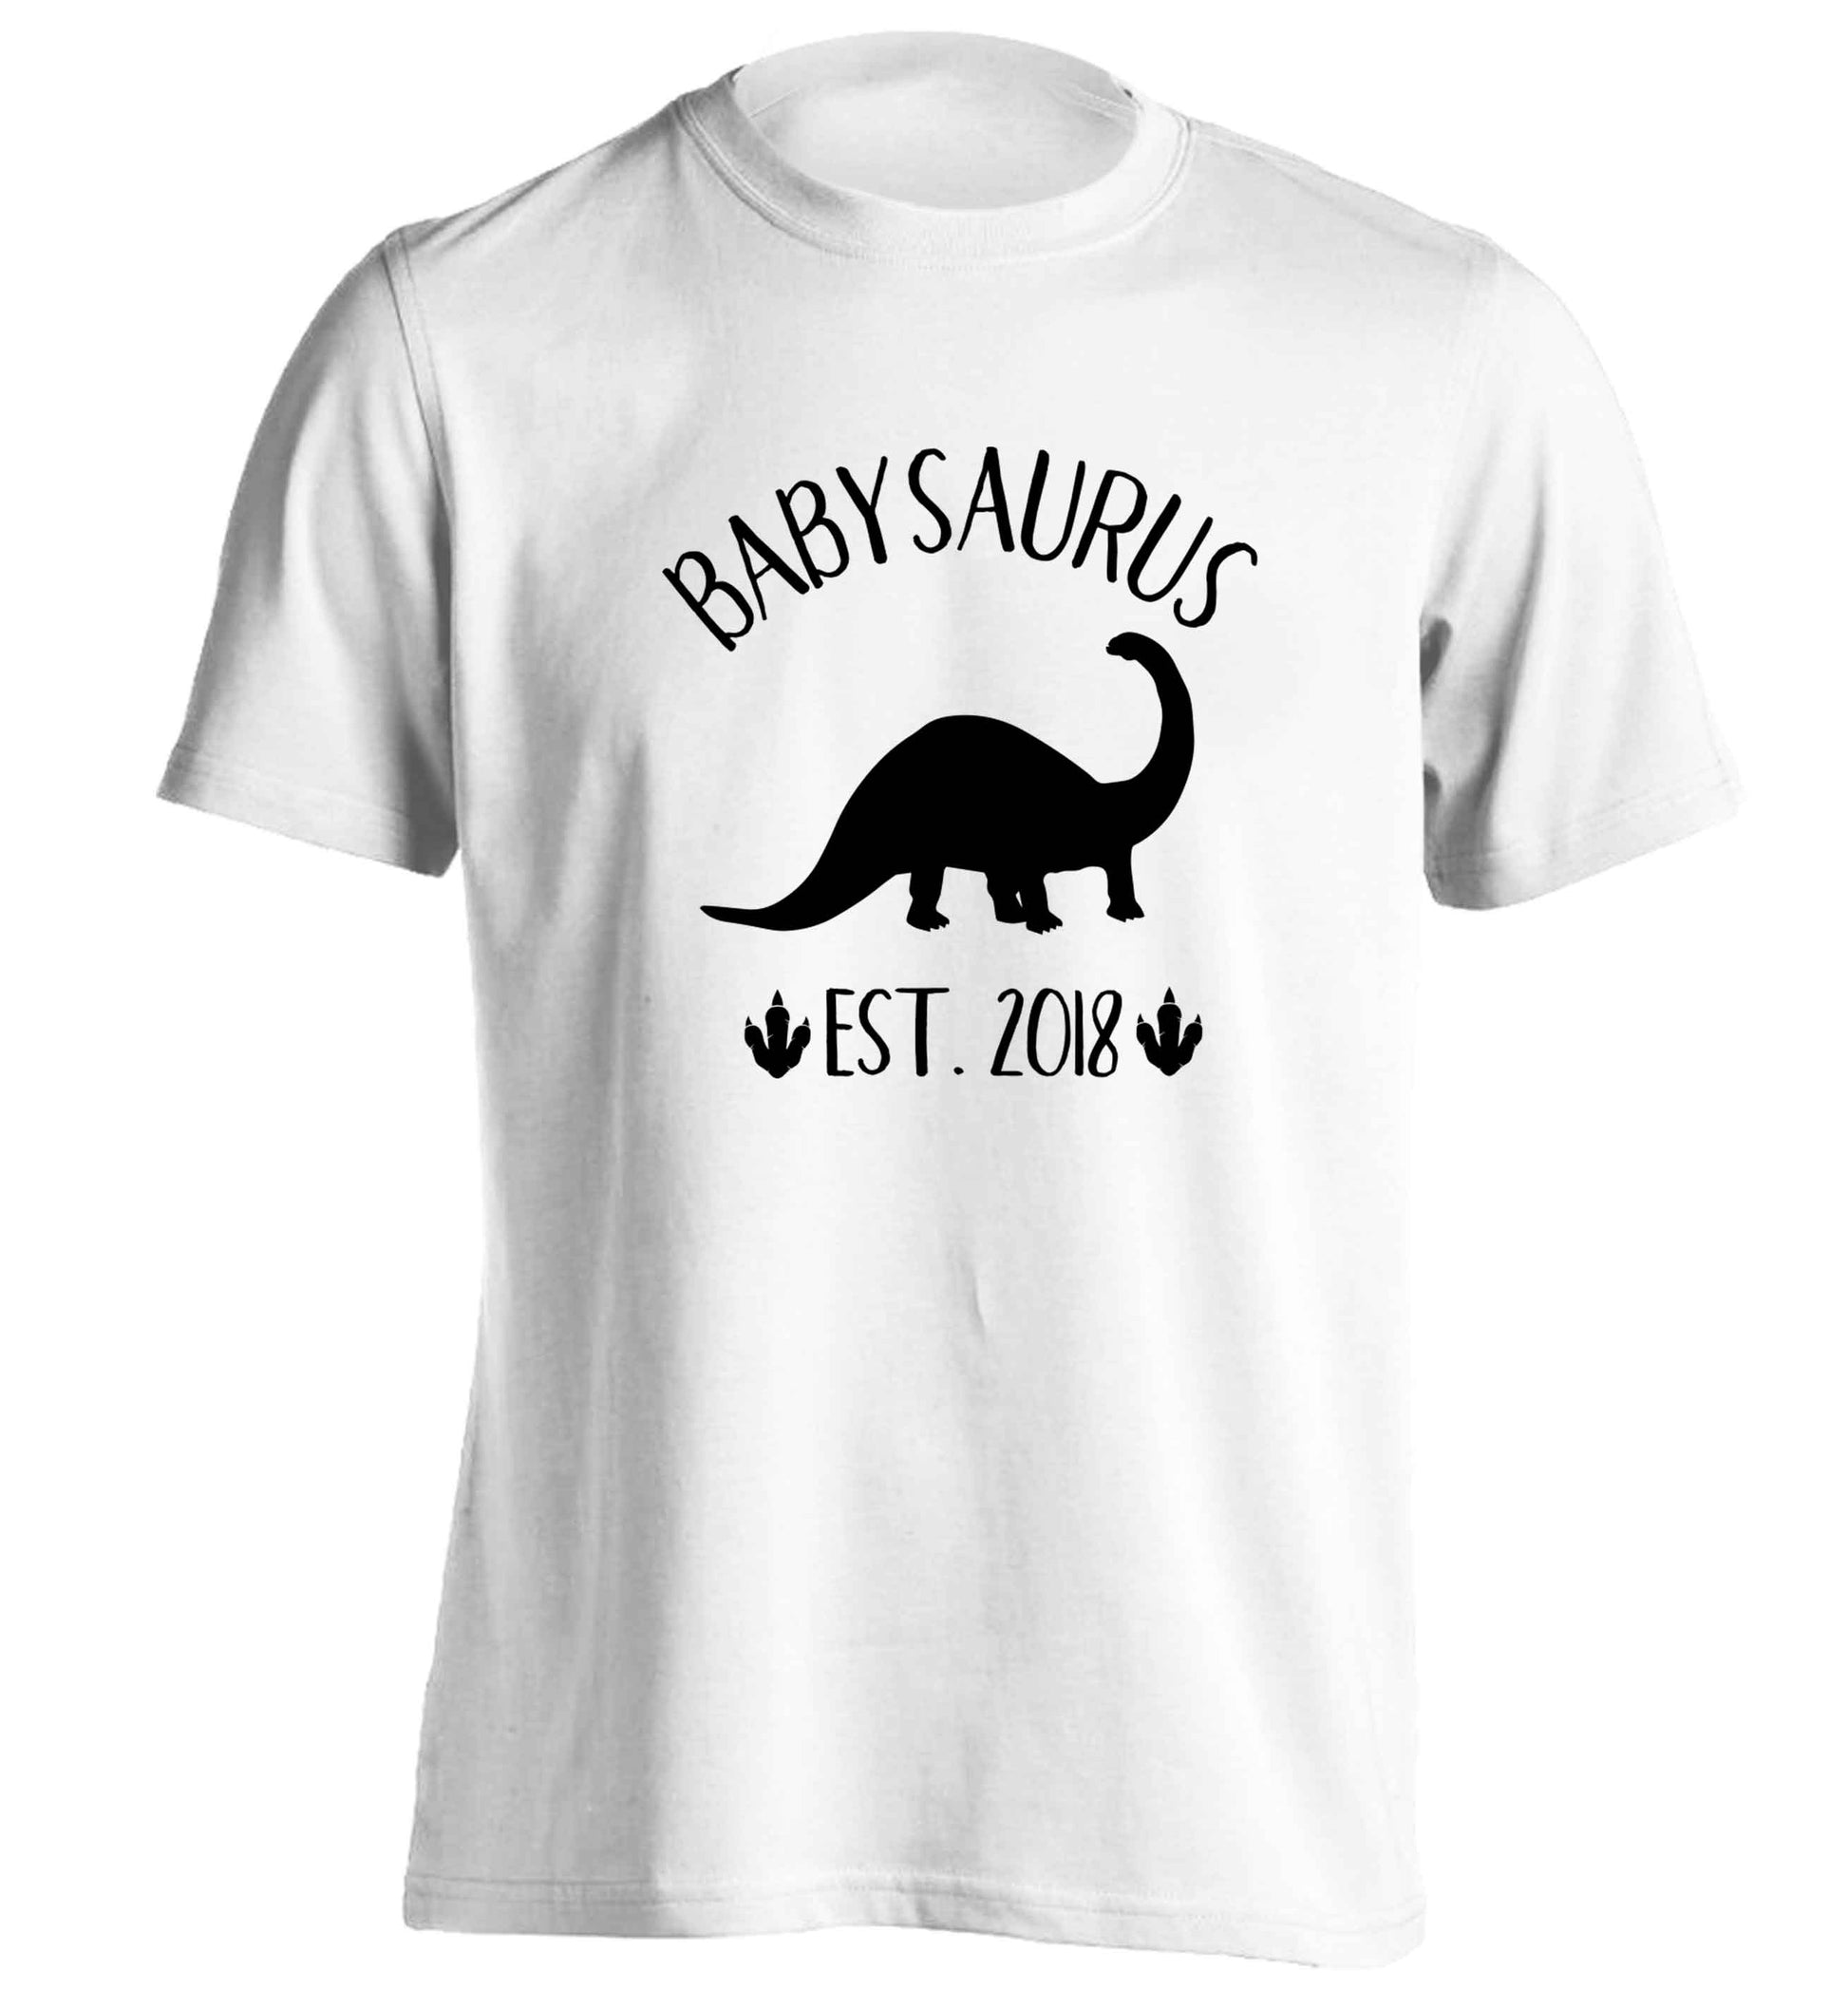 Personalised babysaurus since (custom date) adults unisex white Tshirt 2XL